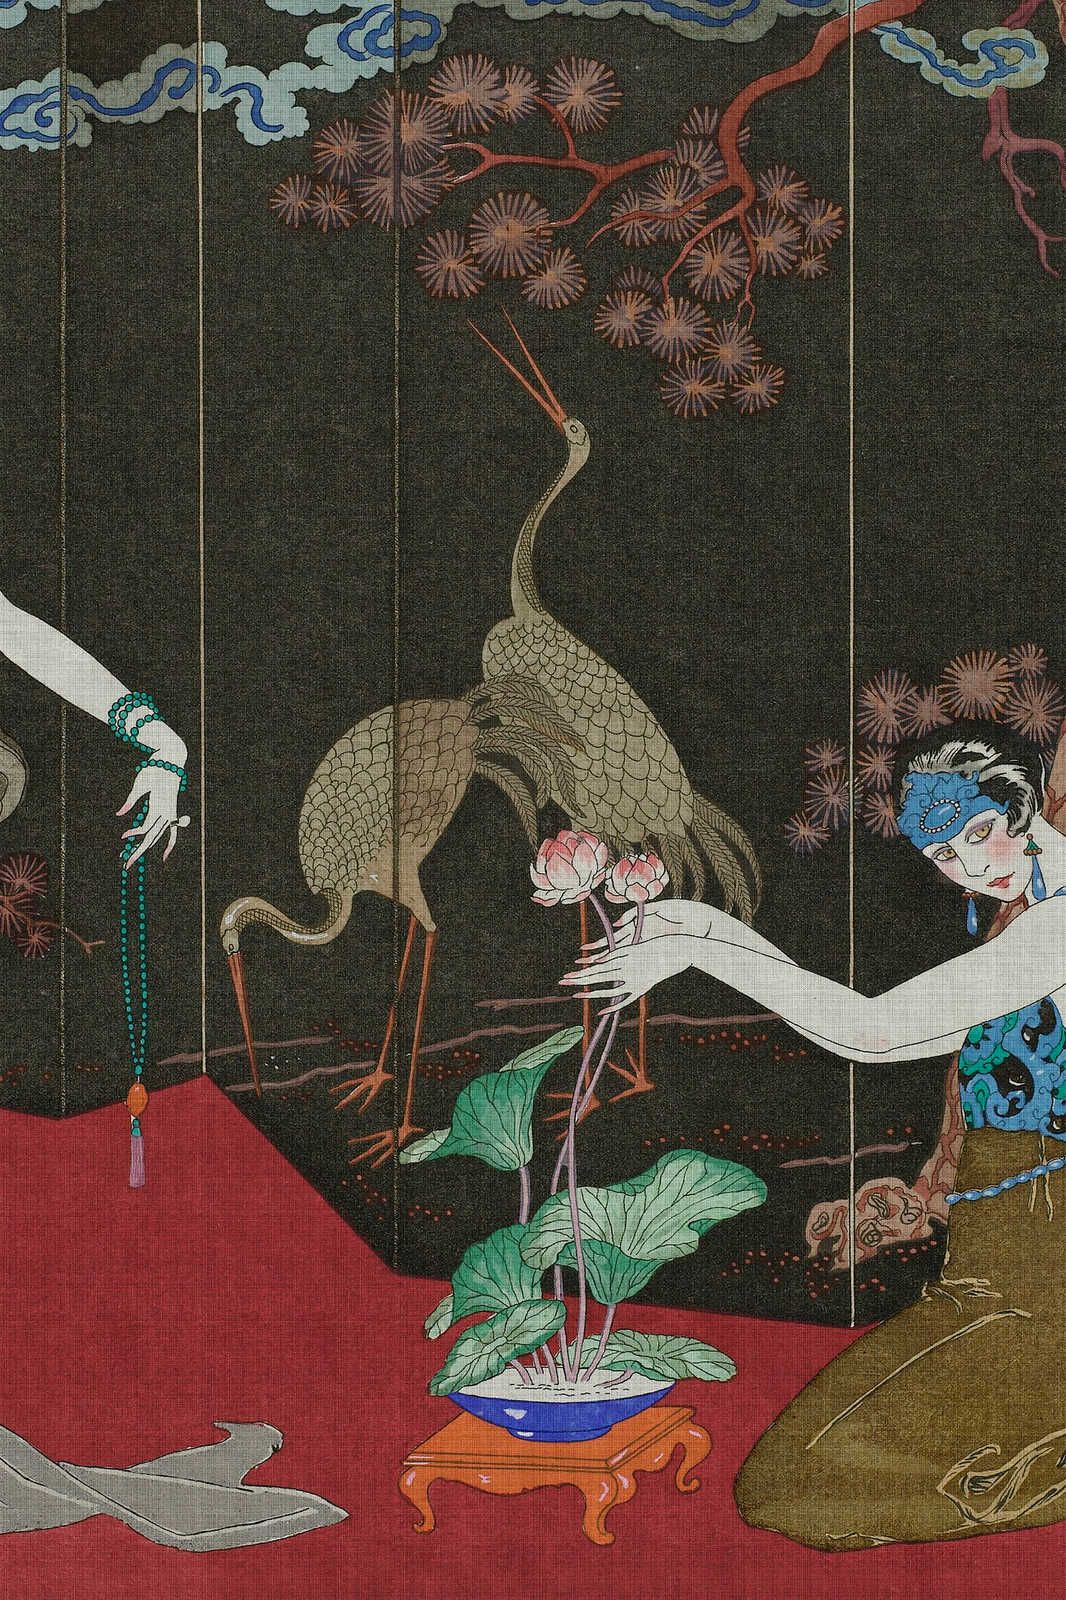             Babylon 1 - Leinwandbild Kunstdruck Klassisch Asiatisch Inspiriert – 0,90 m x 0,60 m
        